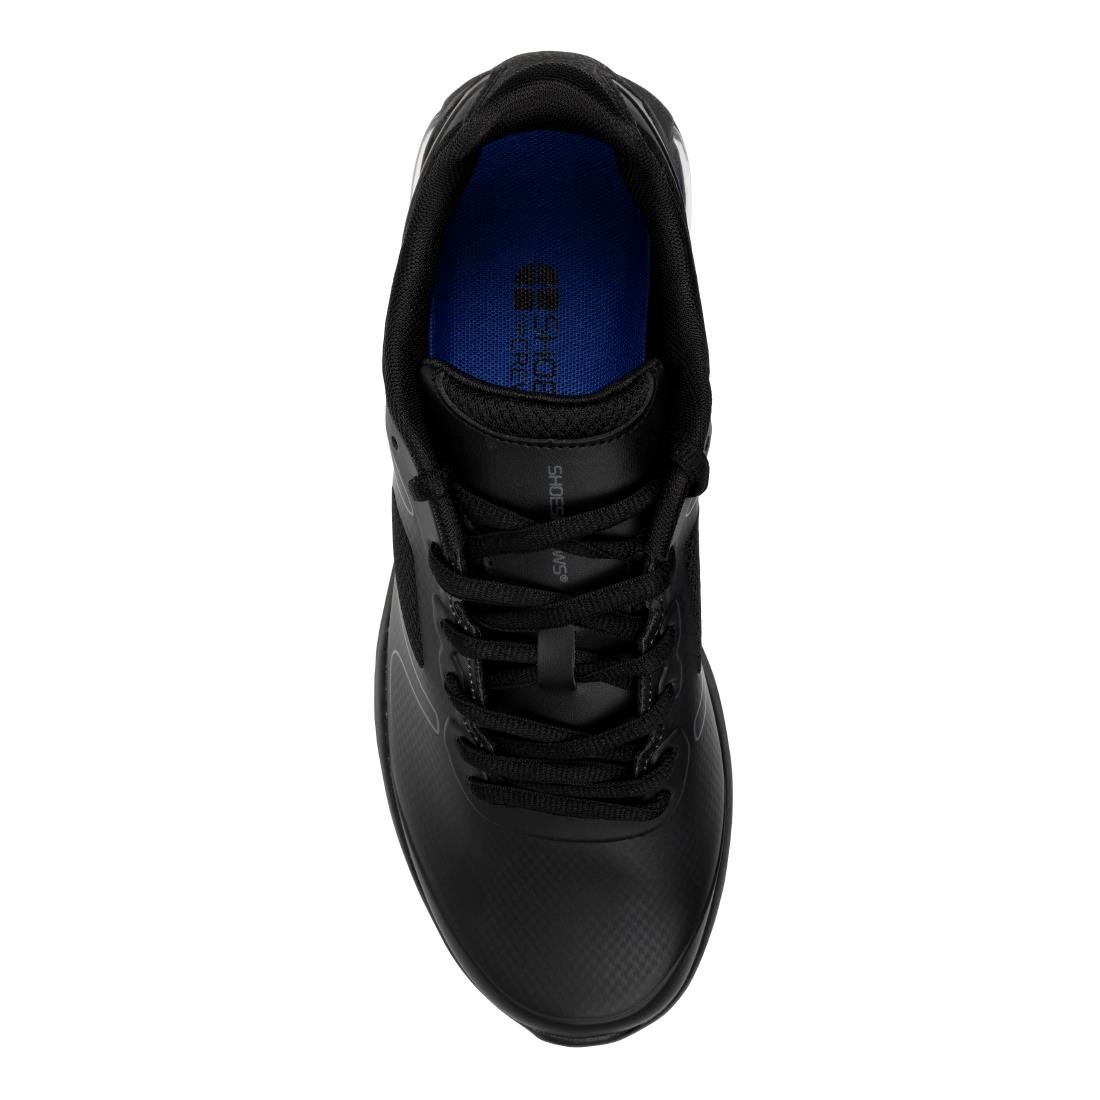 BB586-47 Shoes for Crews Men's Evolution Trainers Black Size 47